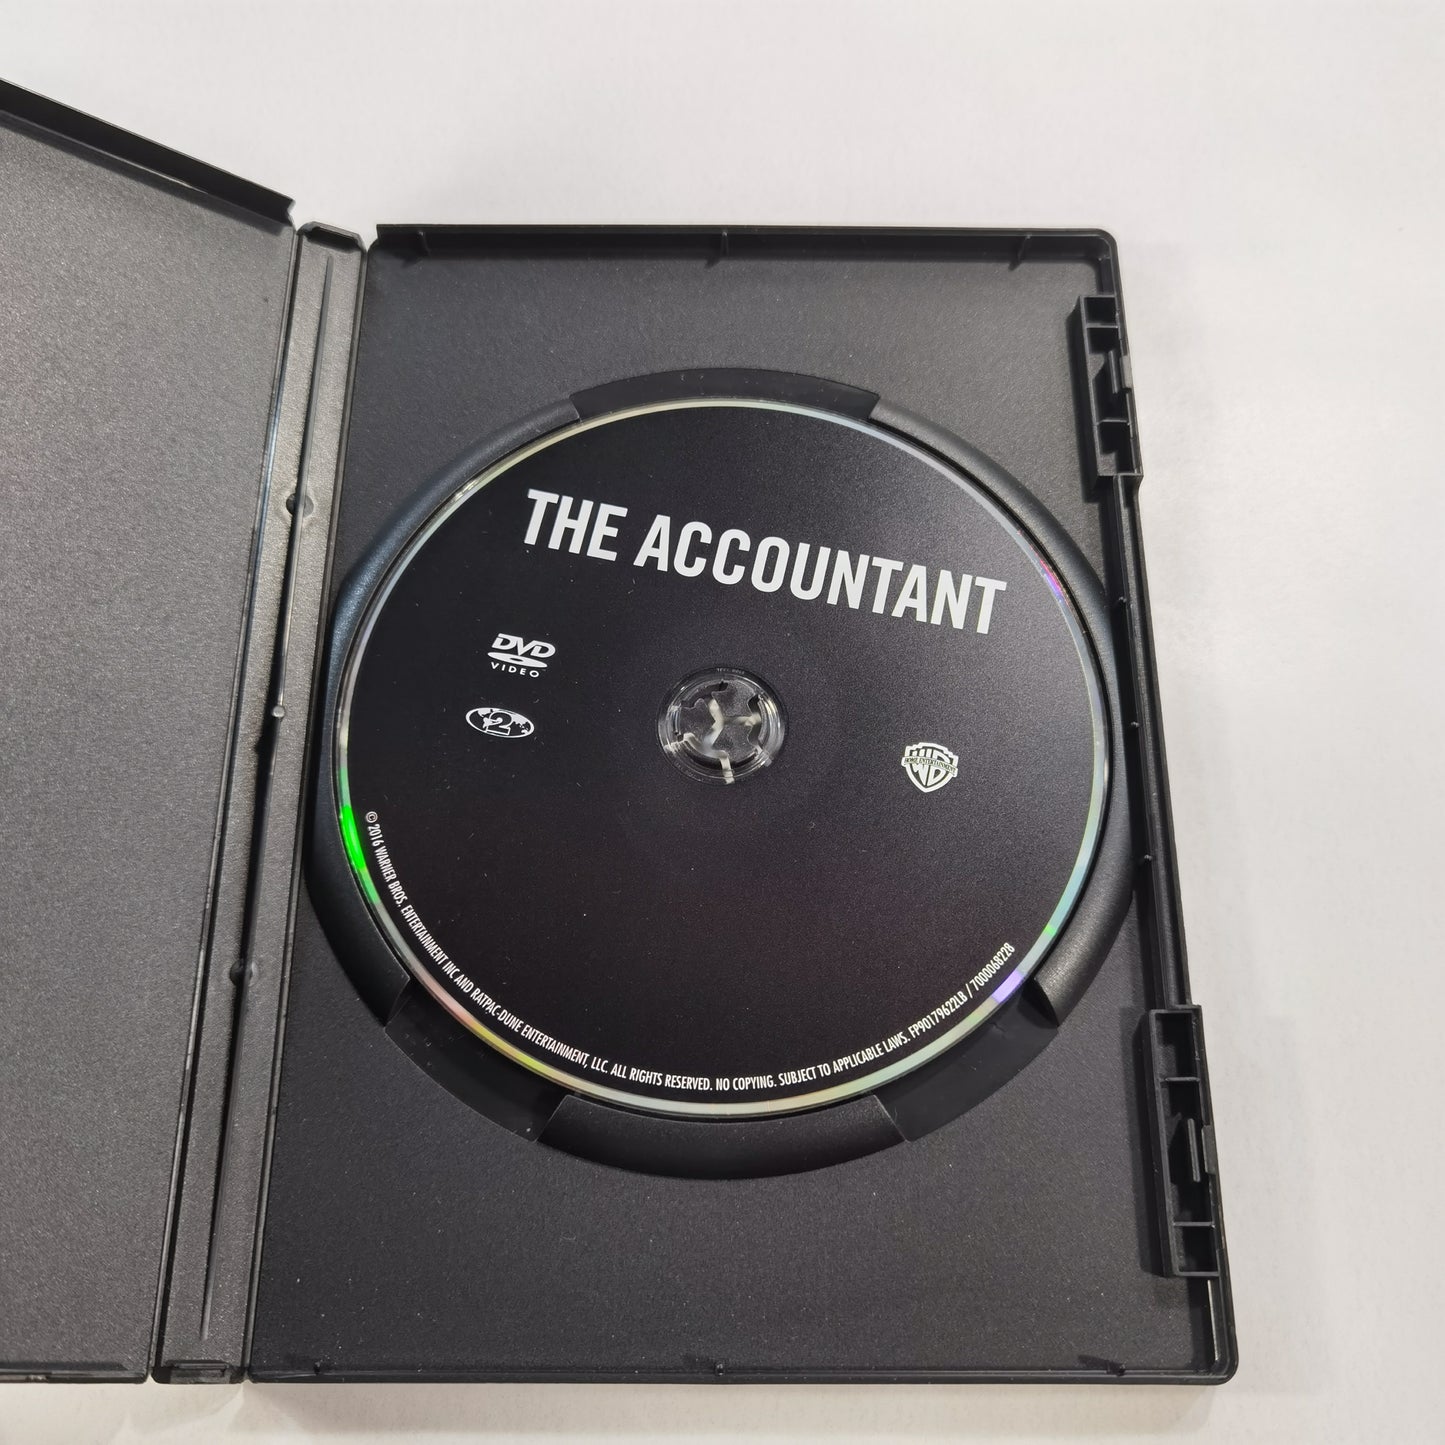 The Accountant (2016) - DVD SE FI 2017 RC